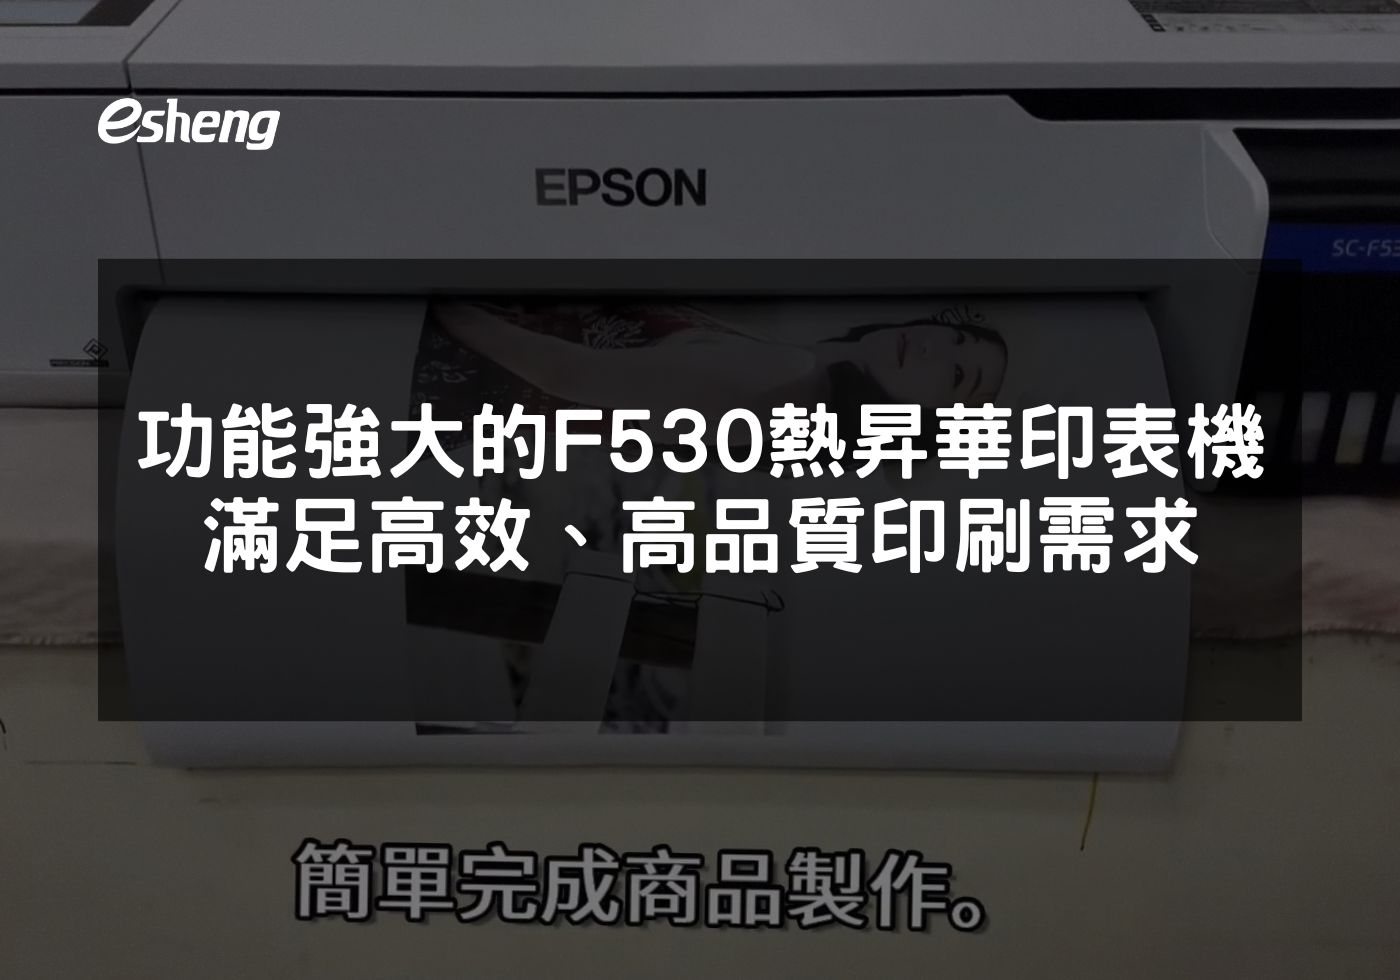 EPSON F530專業熱昇華印表機的功能和優勢